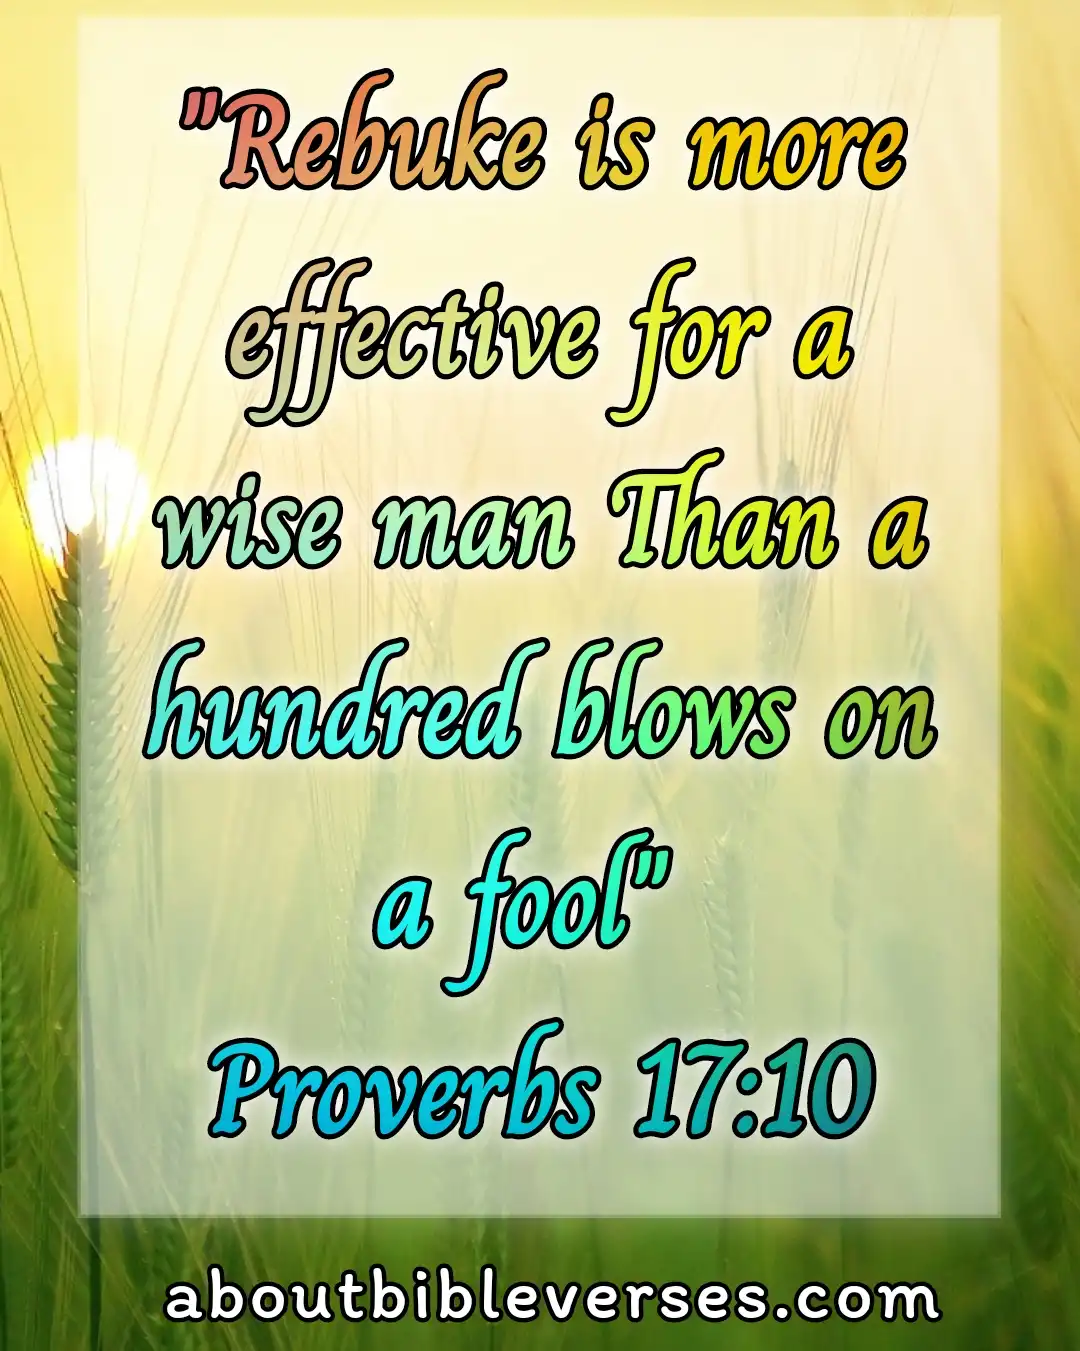 Today bible verse (Proverbs 17:10)